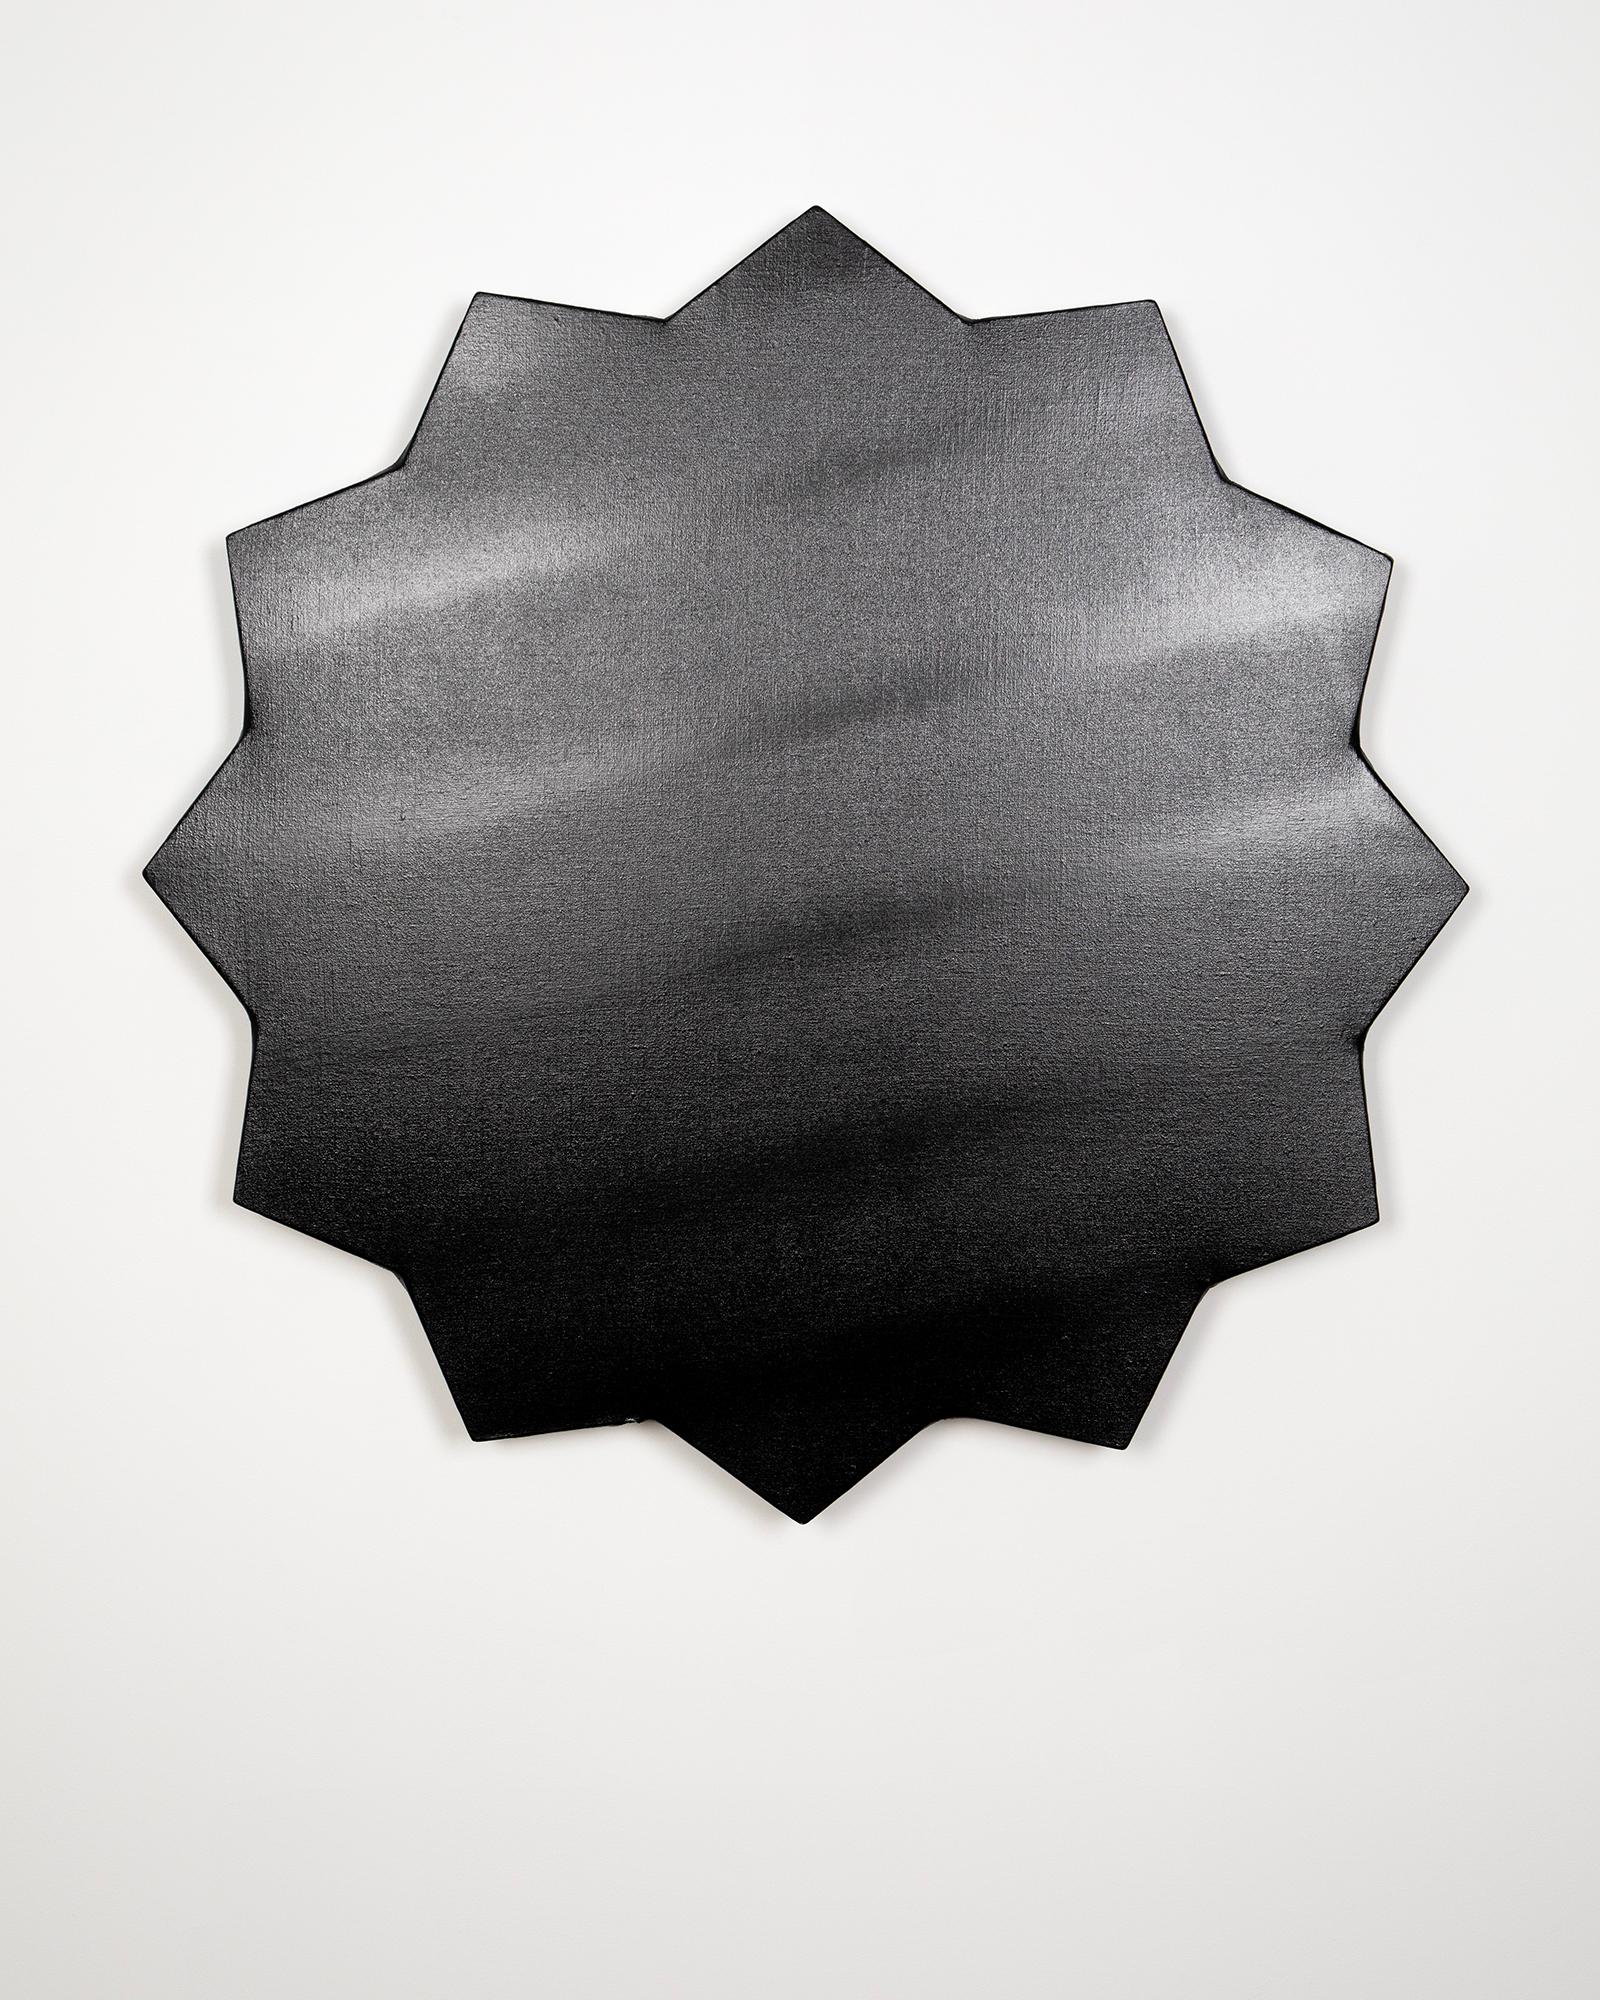 Morgan Sims

Onyx

42.25” x 42.75” x 2.5”

acrylic on linen

2023